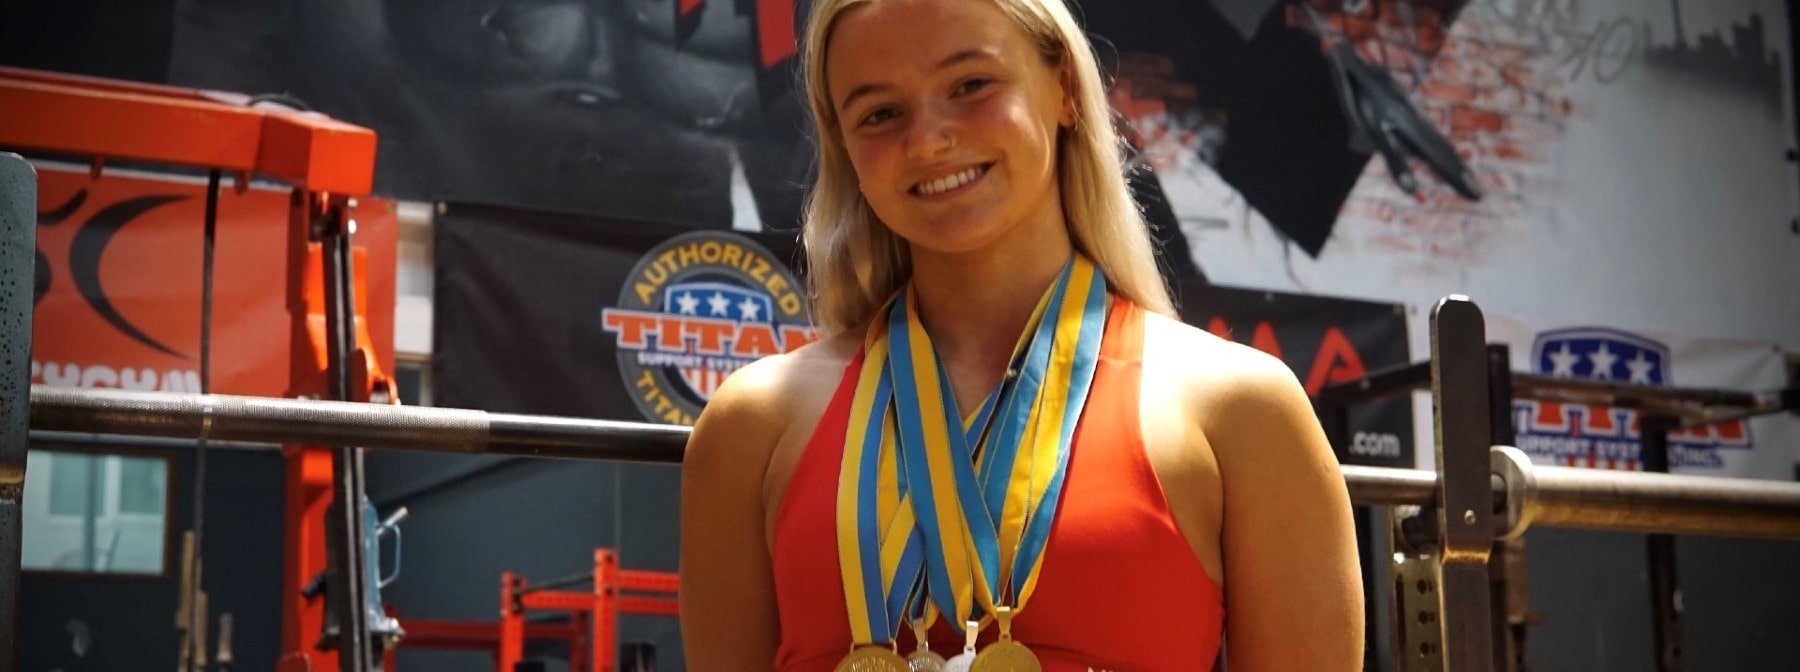 Junior Wereldkampioen Powerlifter op 18-jarige leeftijd | Laoise Quinn’s Road To G.O.A.T